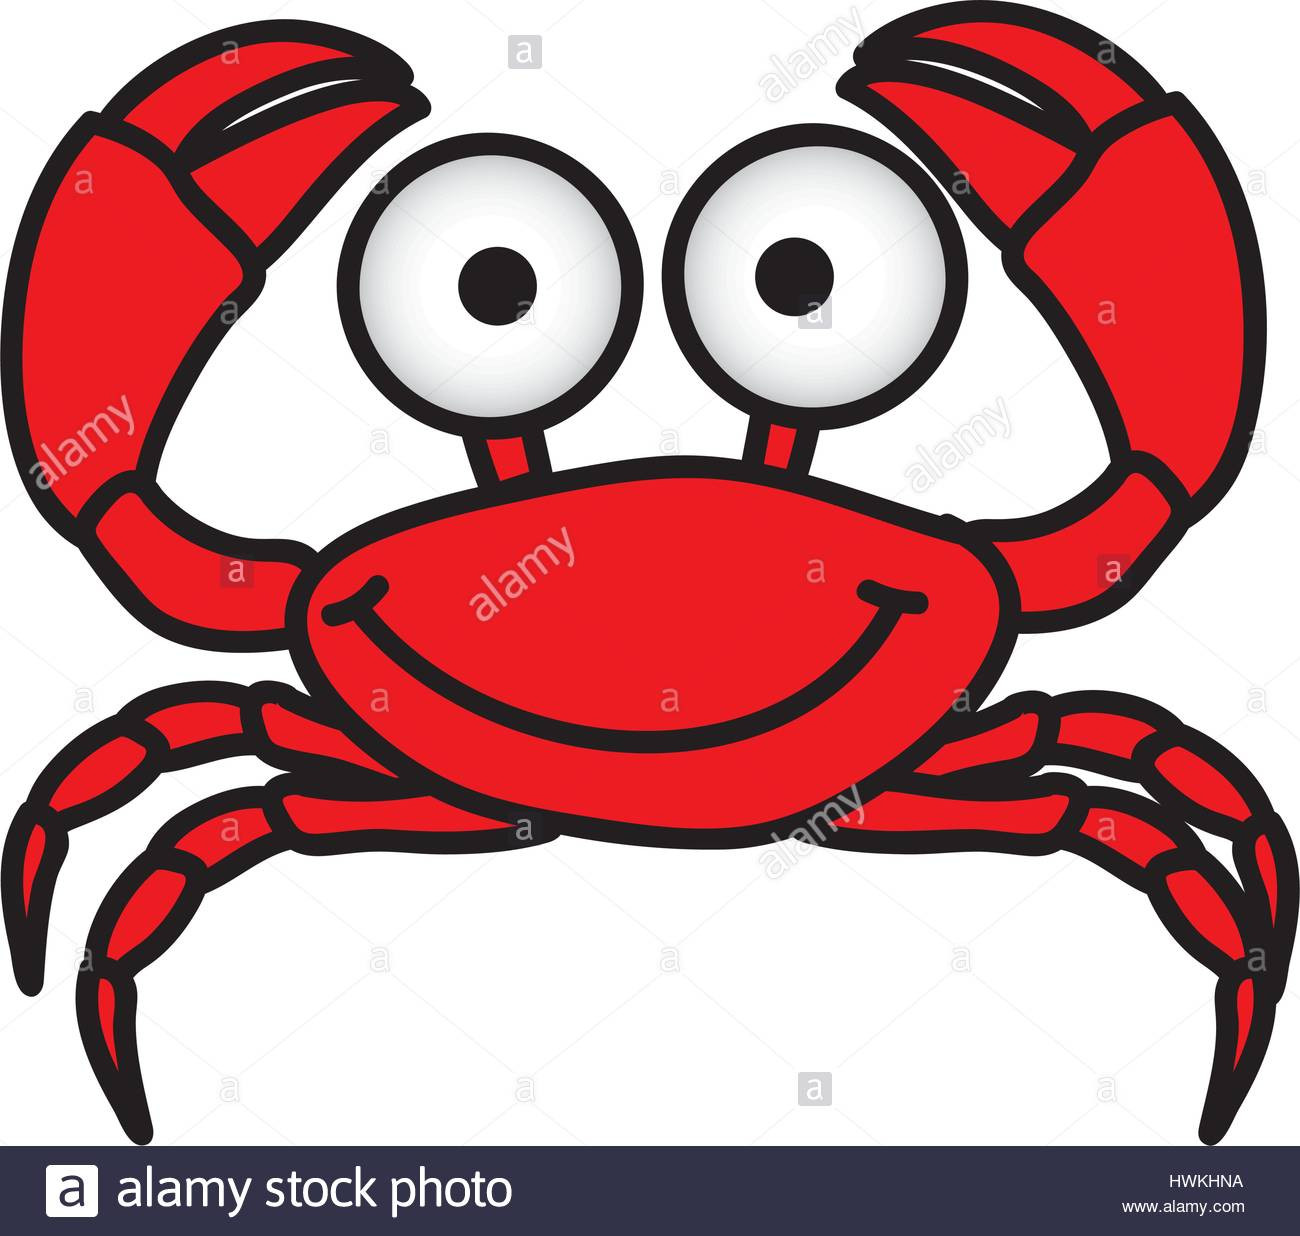 Come at Me Crab Lcon 250 Cool Crab Icon 250 Crabby Crab Icon 250 